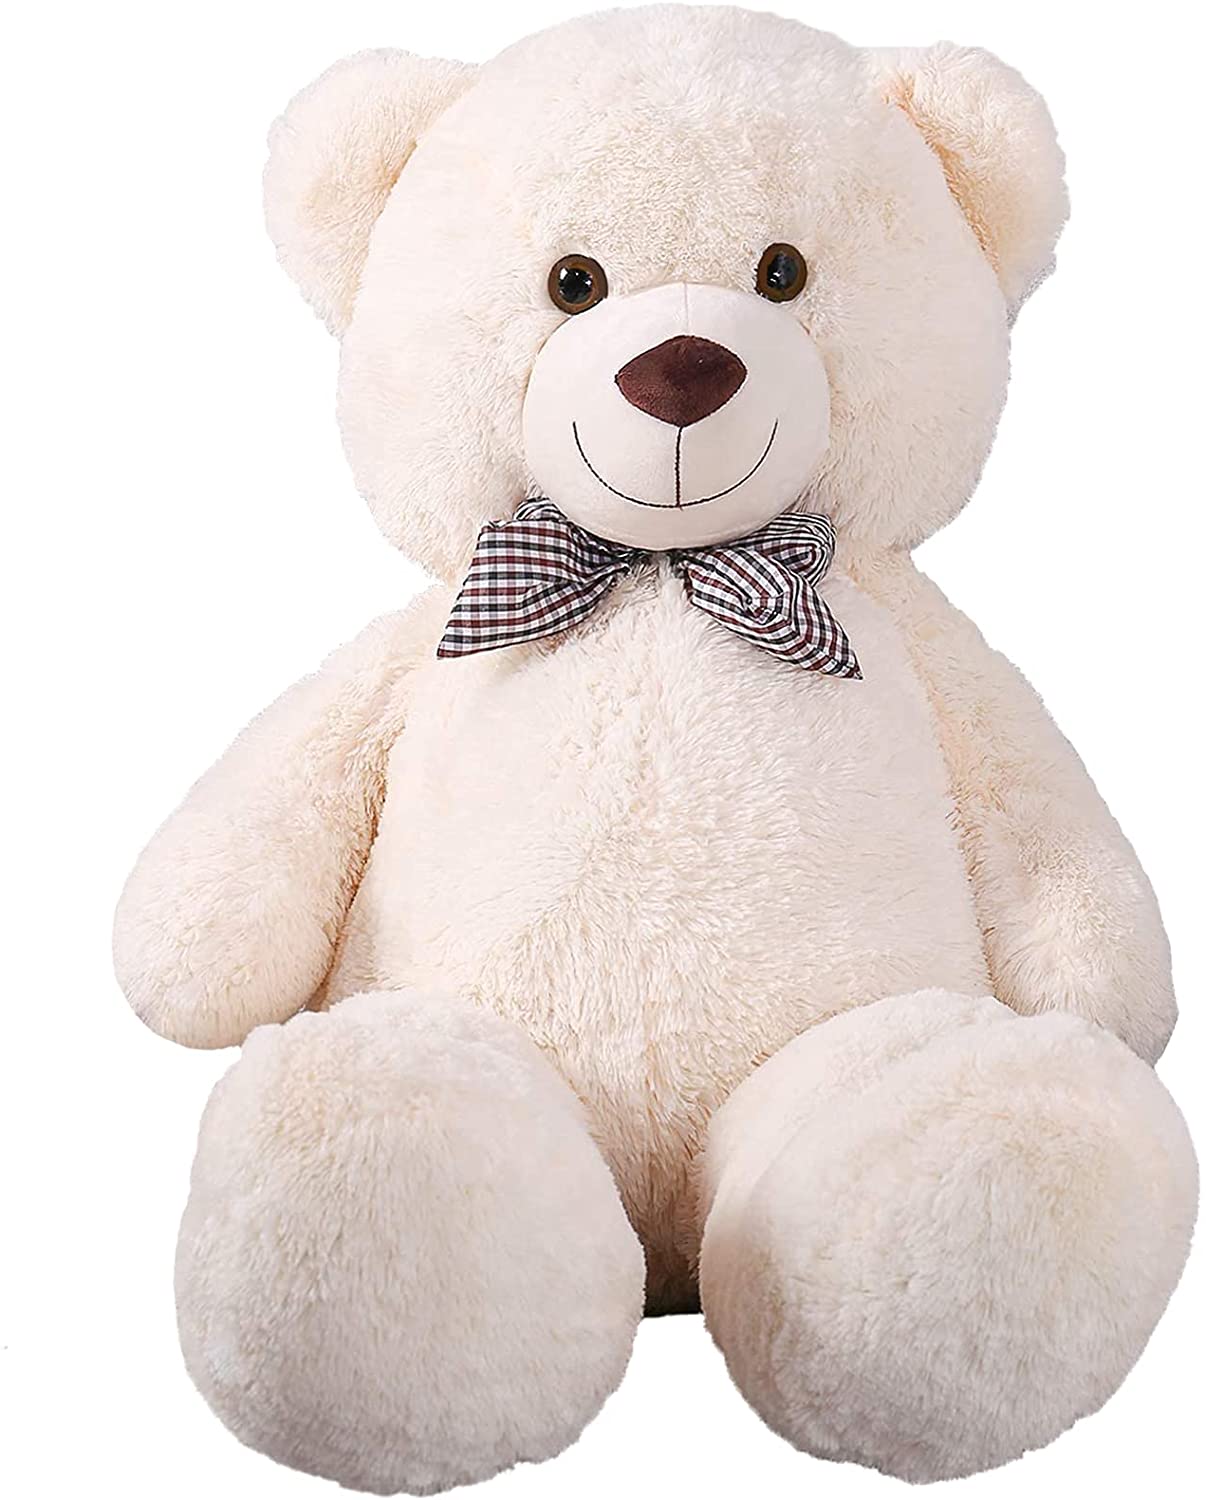 24 Inch Plush Teddy Bear Giant Big Cute Beige Huge White Soft Toys Doll Kid Gift 